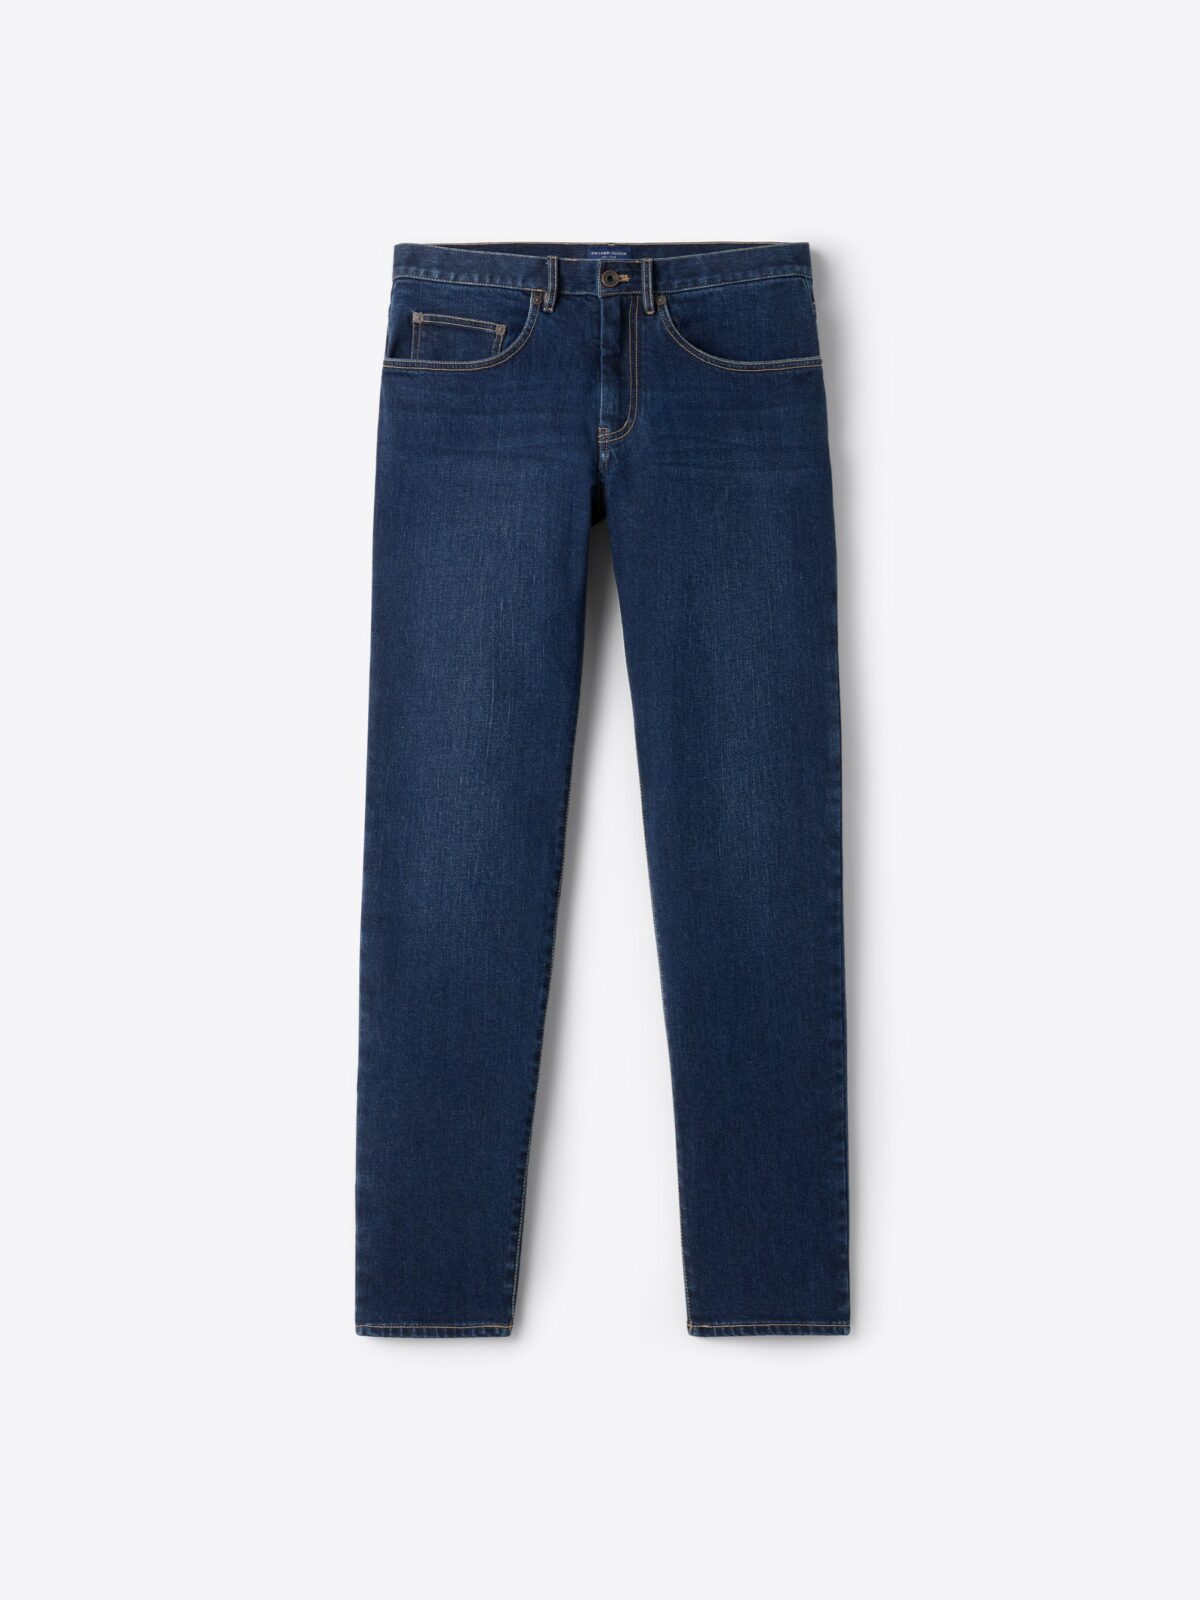 Estrolo | Buy Dark Blue Denim Jeans Pant For Men | Stretchable Slim-fit